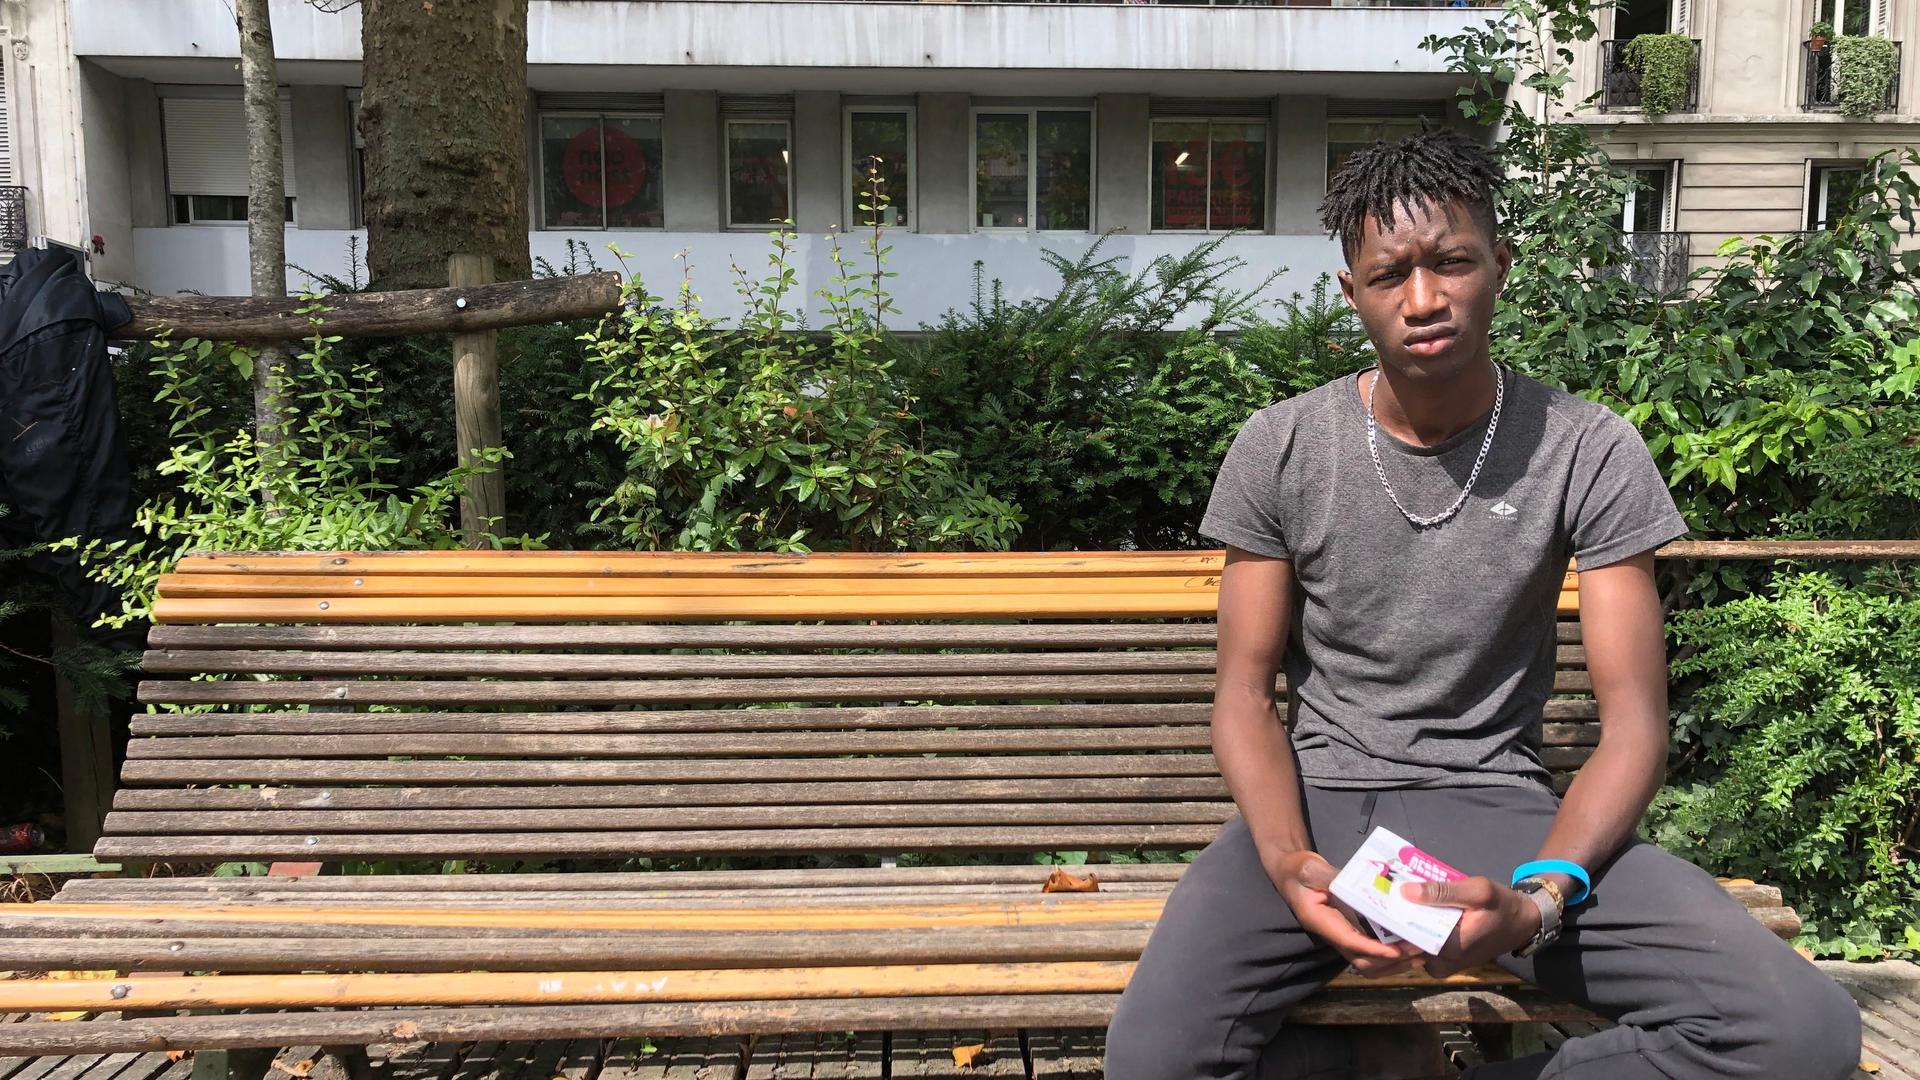 Gandega Bakary, 16, who is originally from Mali, has been living on the street in France, even amid the coronavirus lockdown.